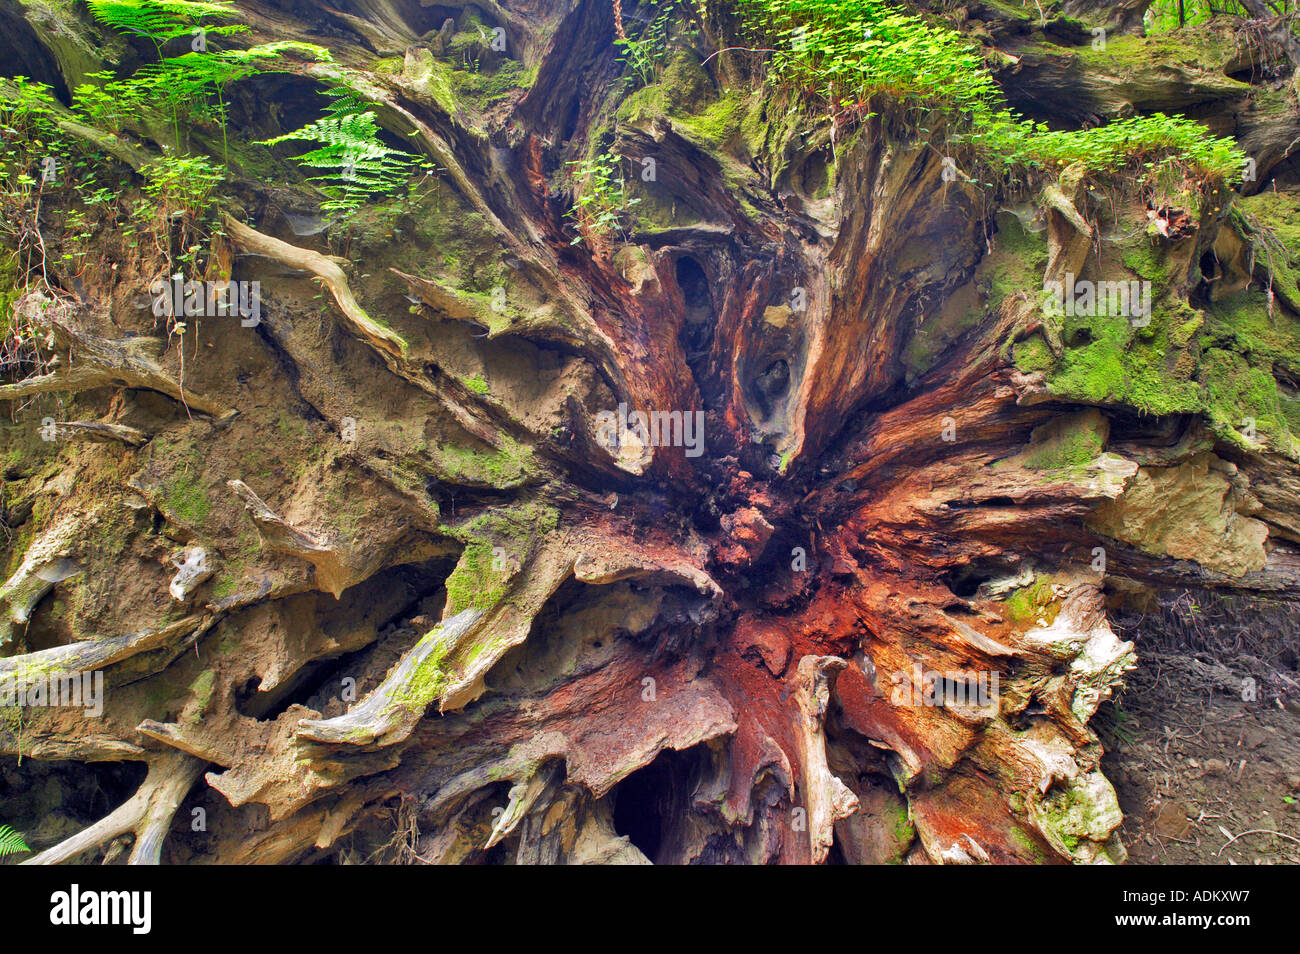 Root ball of fallen Redwood tree Humbolt Redwood State Park California Stock Photo